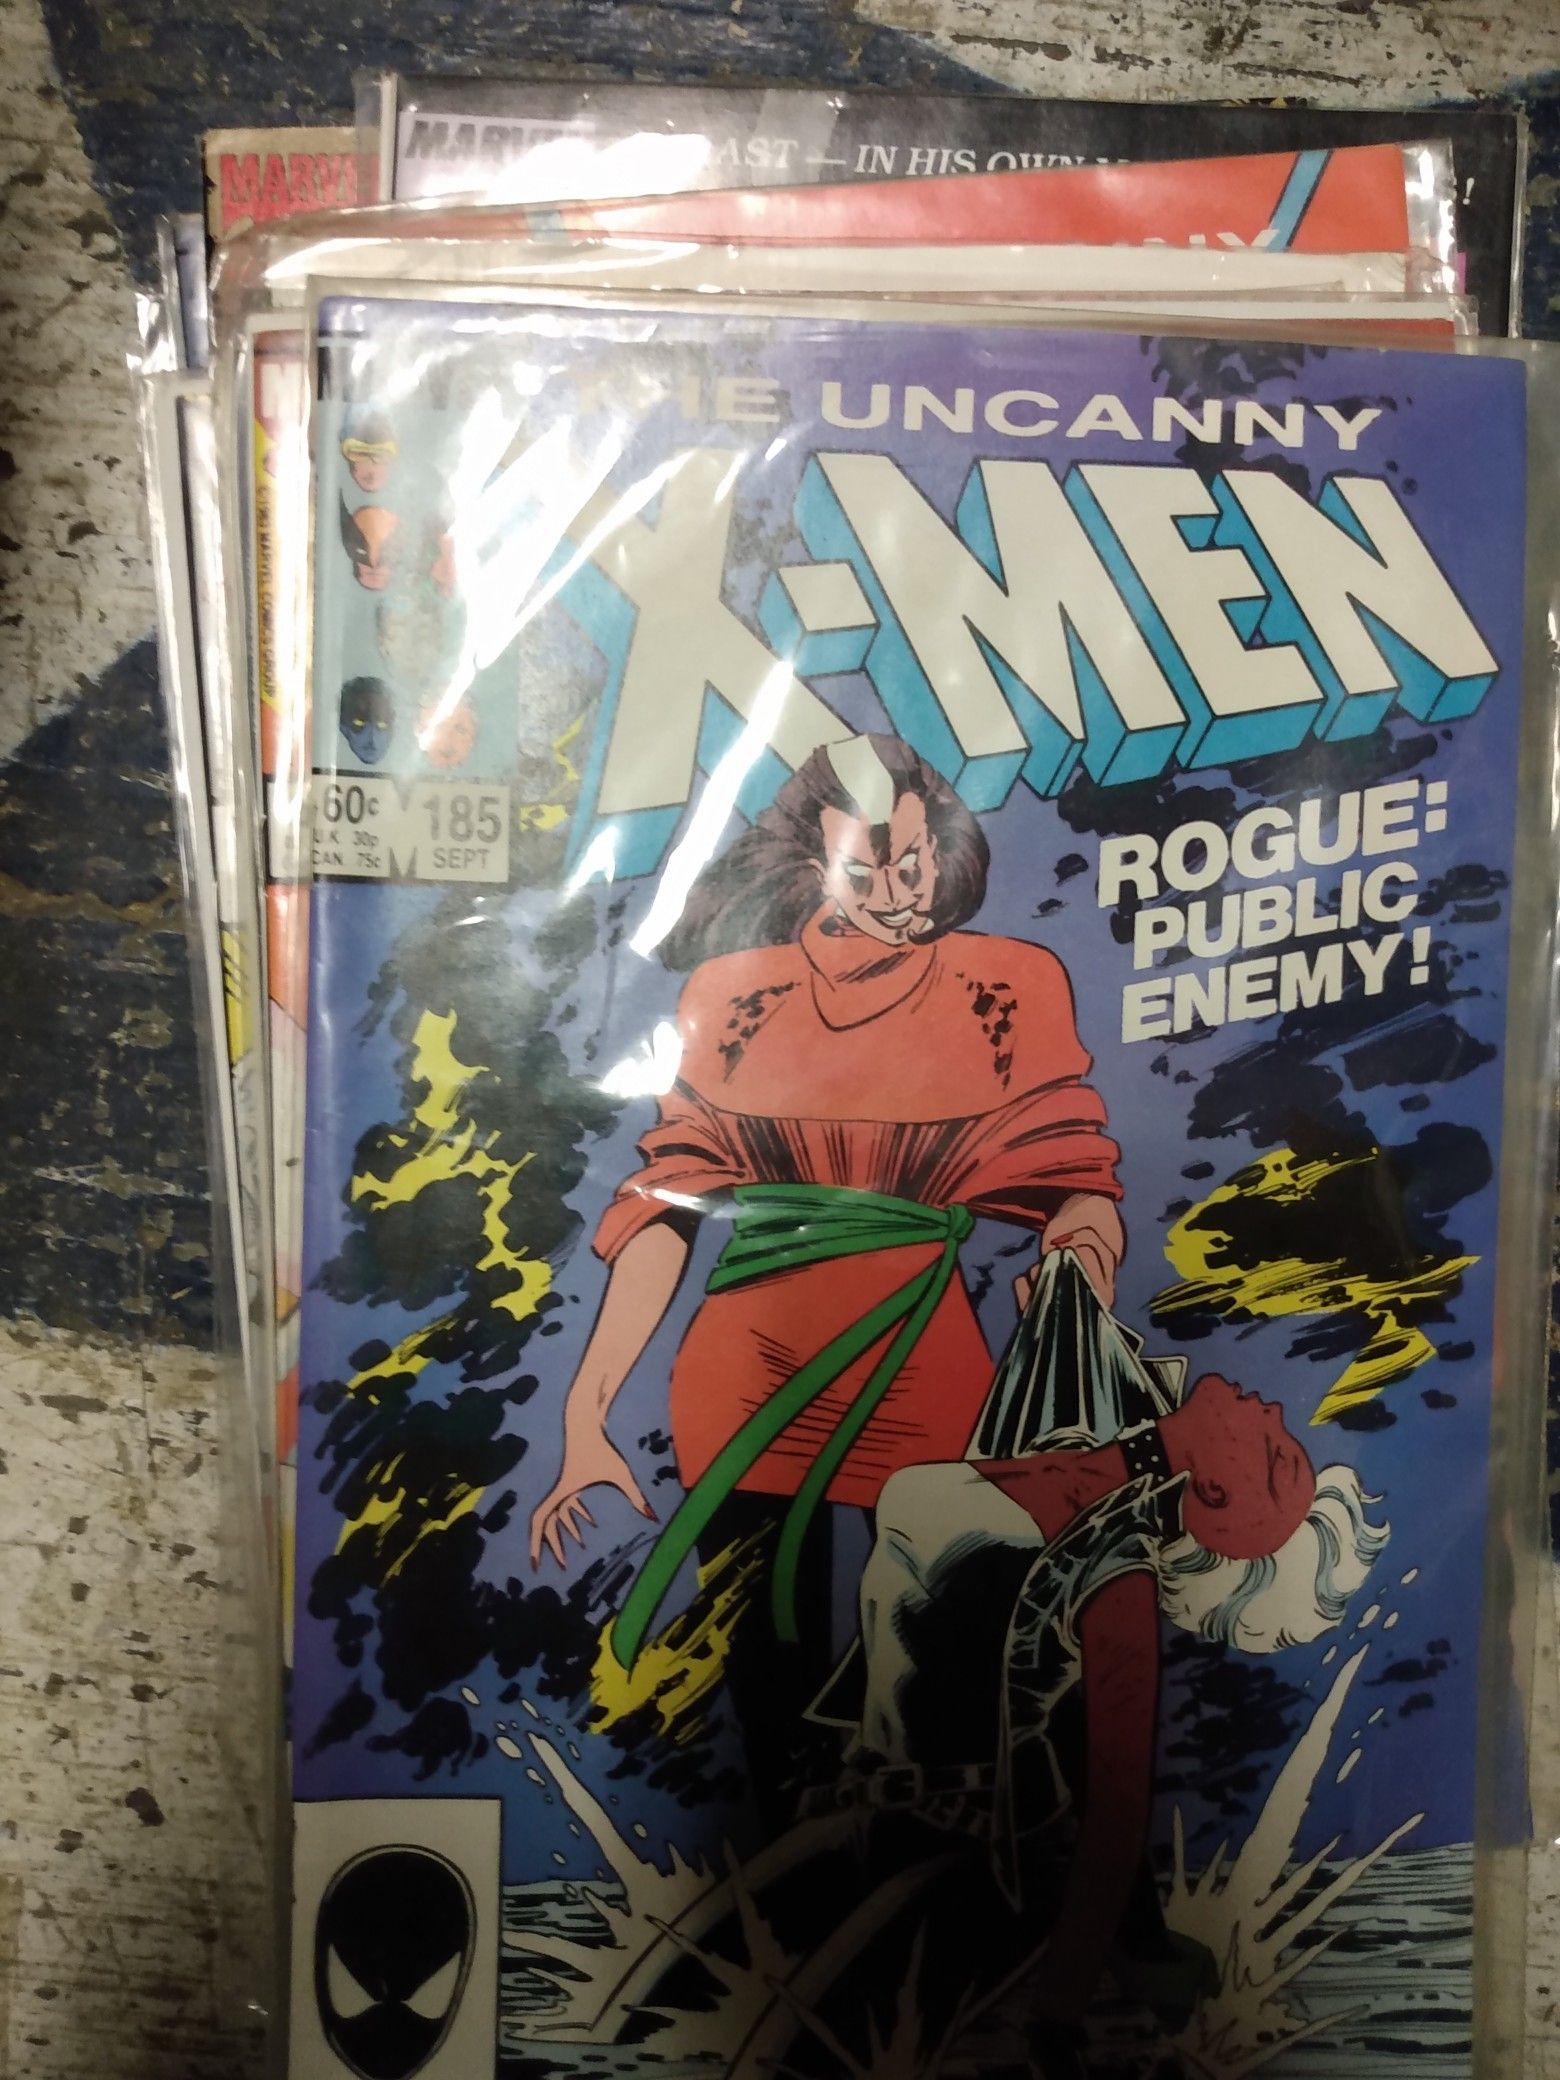 Uncanny X-men #185